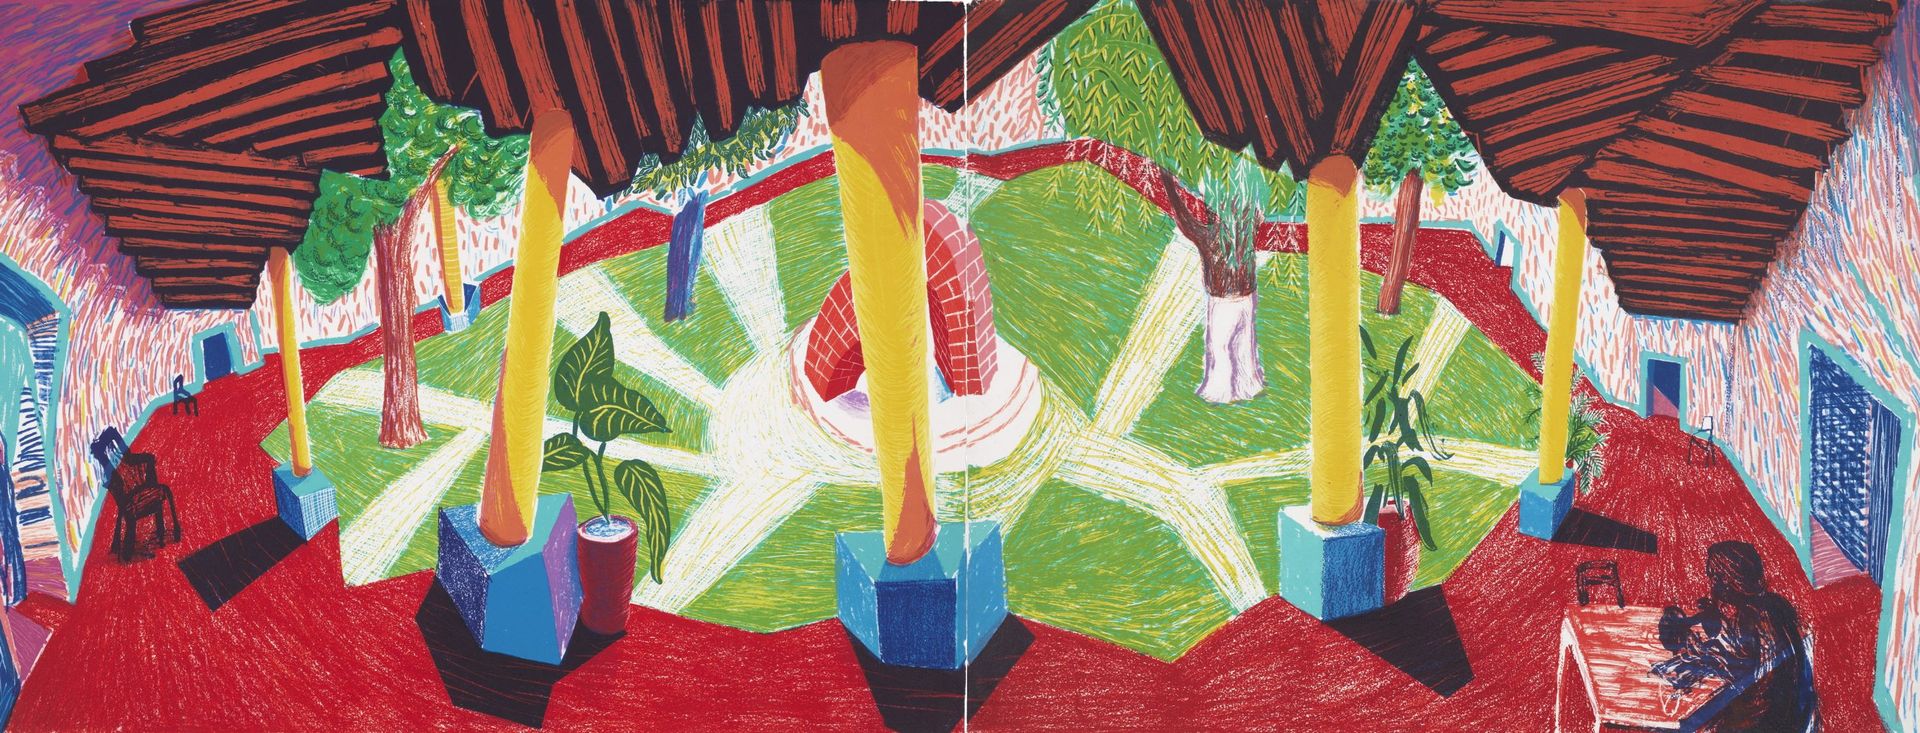 David Hockney, Hotel Acatlan: Two Weeks Later, 1985
